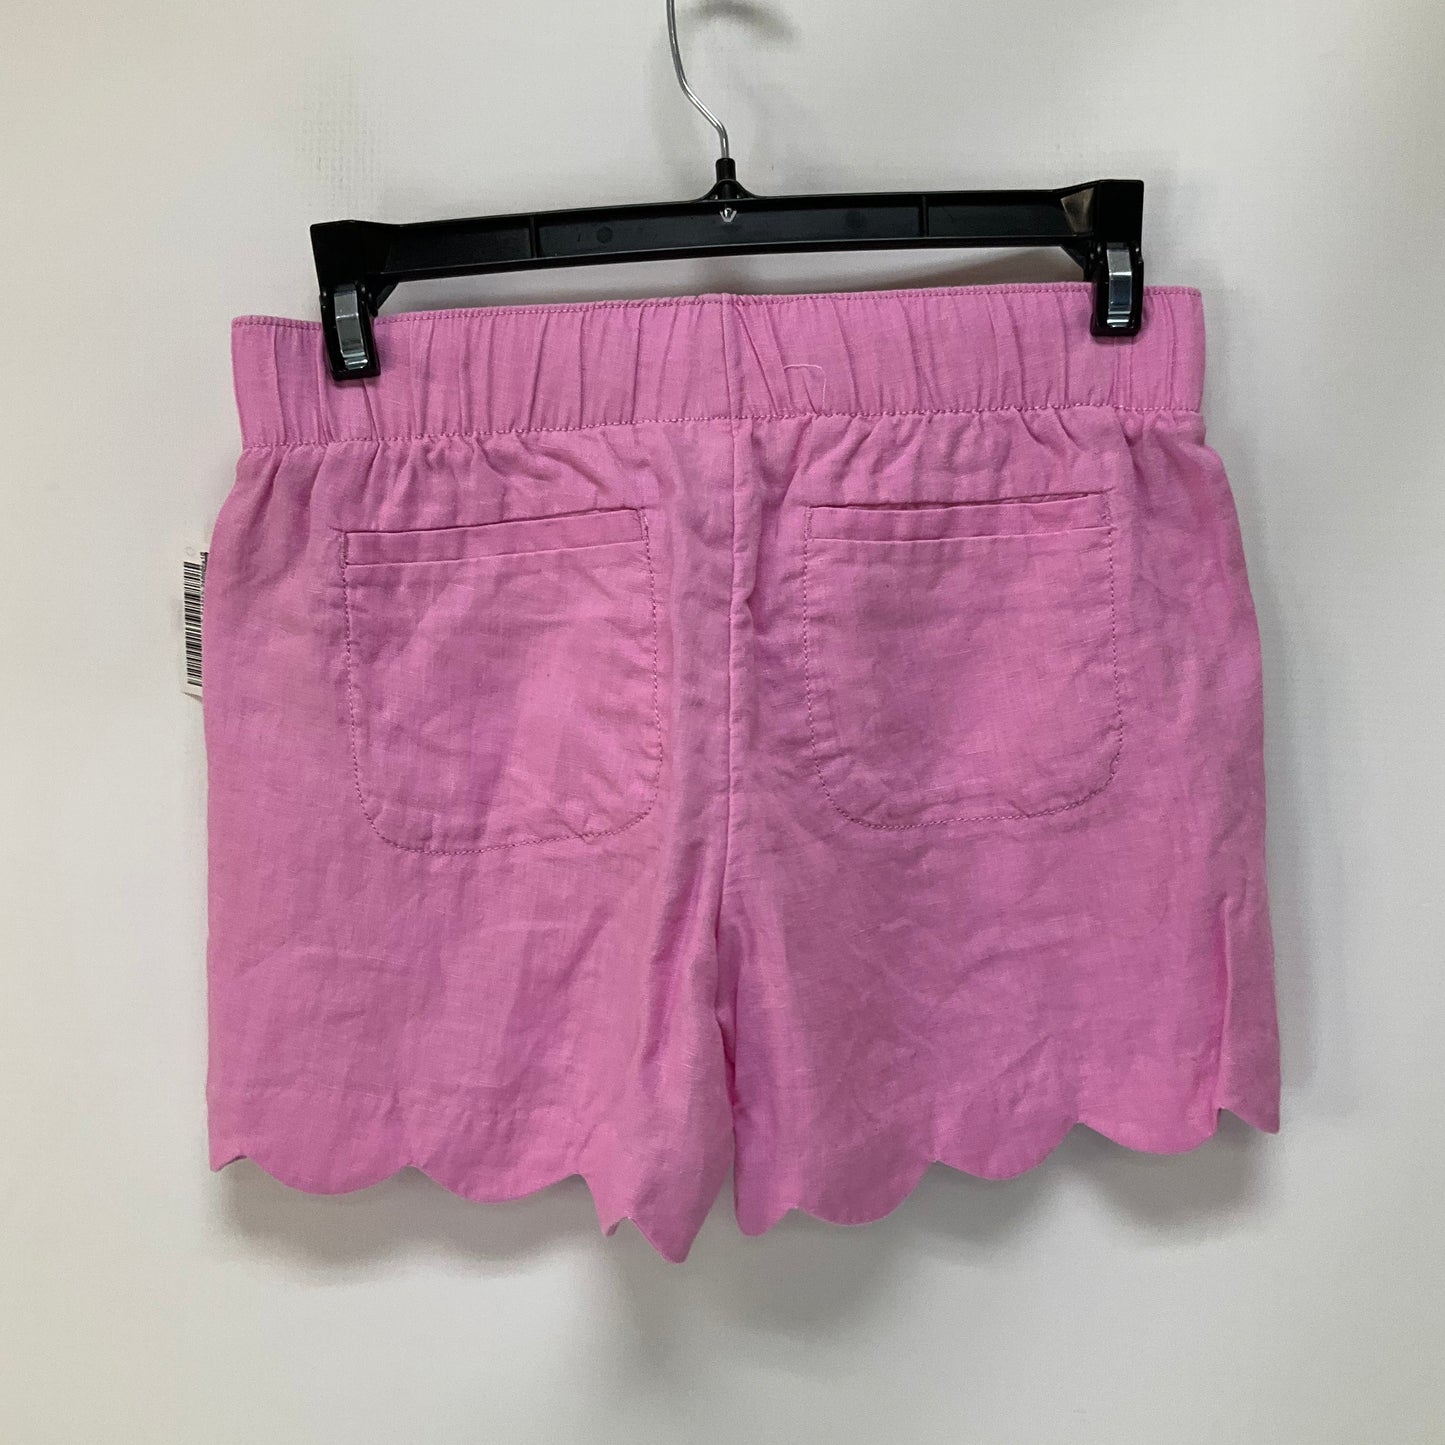 Pink Shorts Lilly Pulitzer, Size Xxs